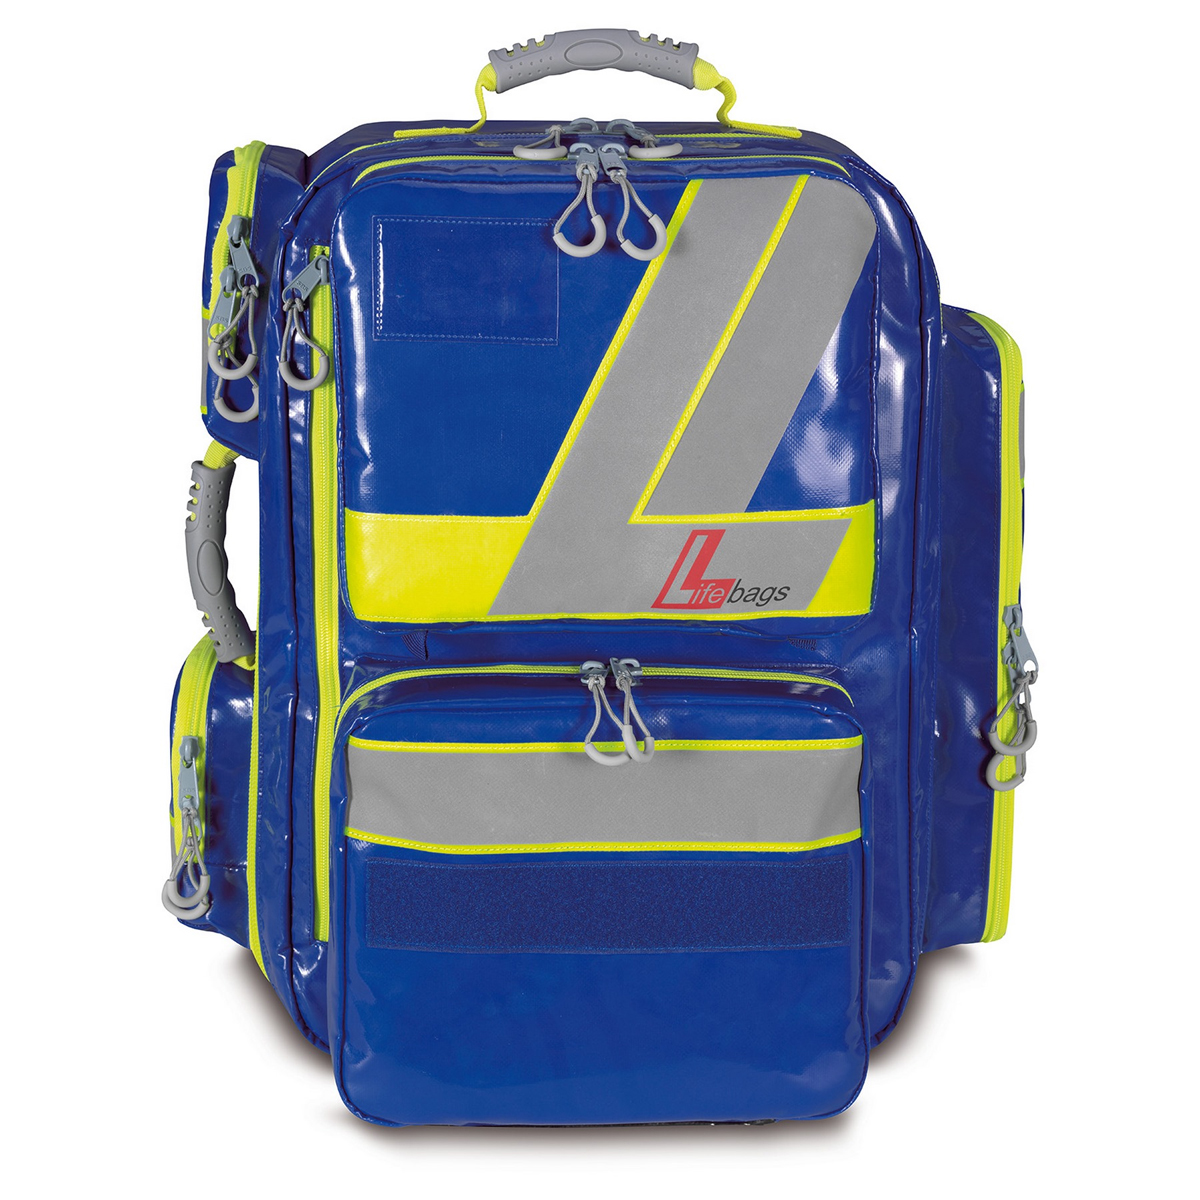 Lifebags Notfallrucksack XL - blau